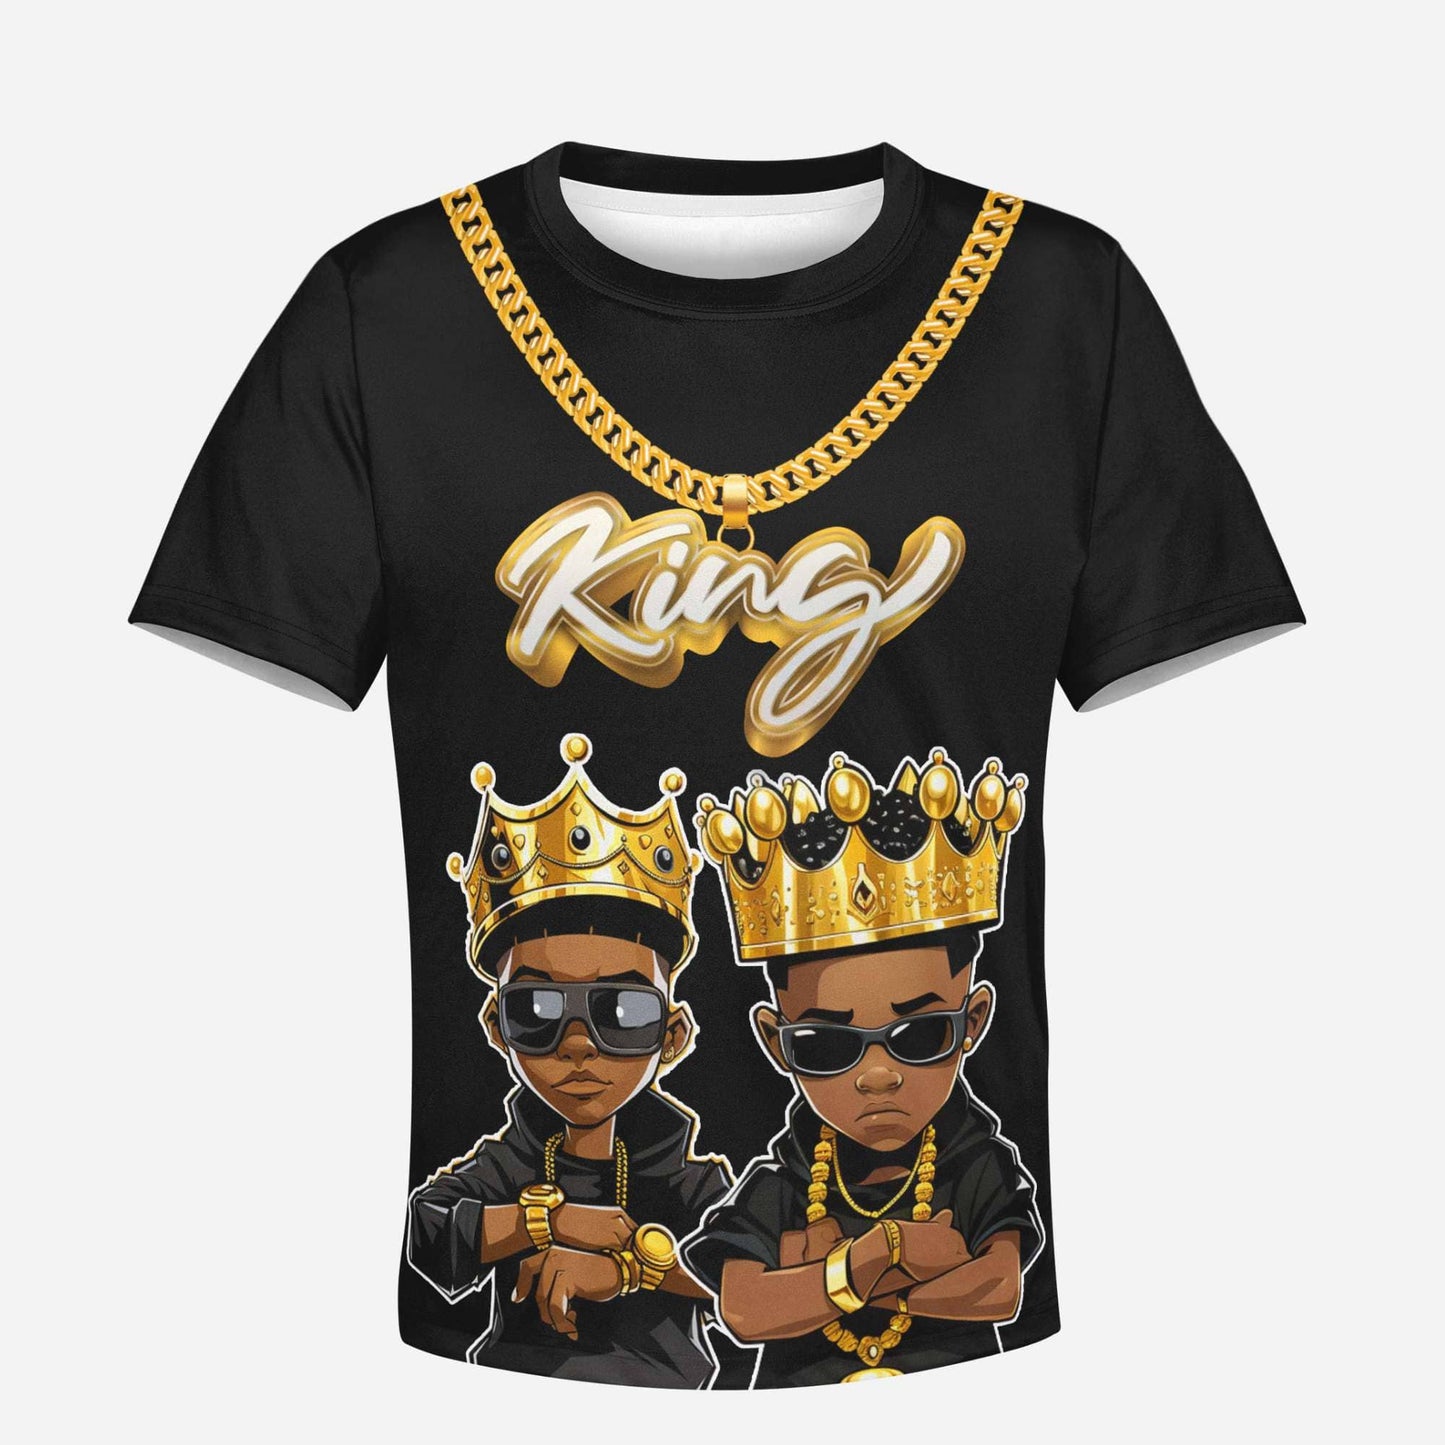 Young King T-shirt